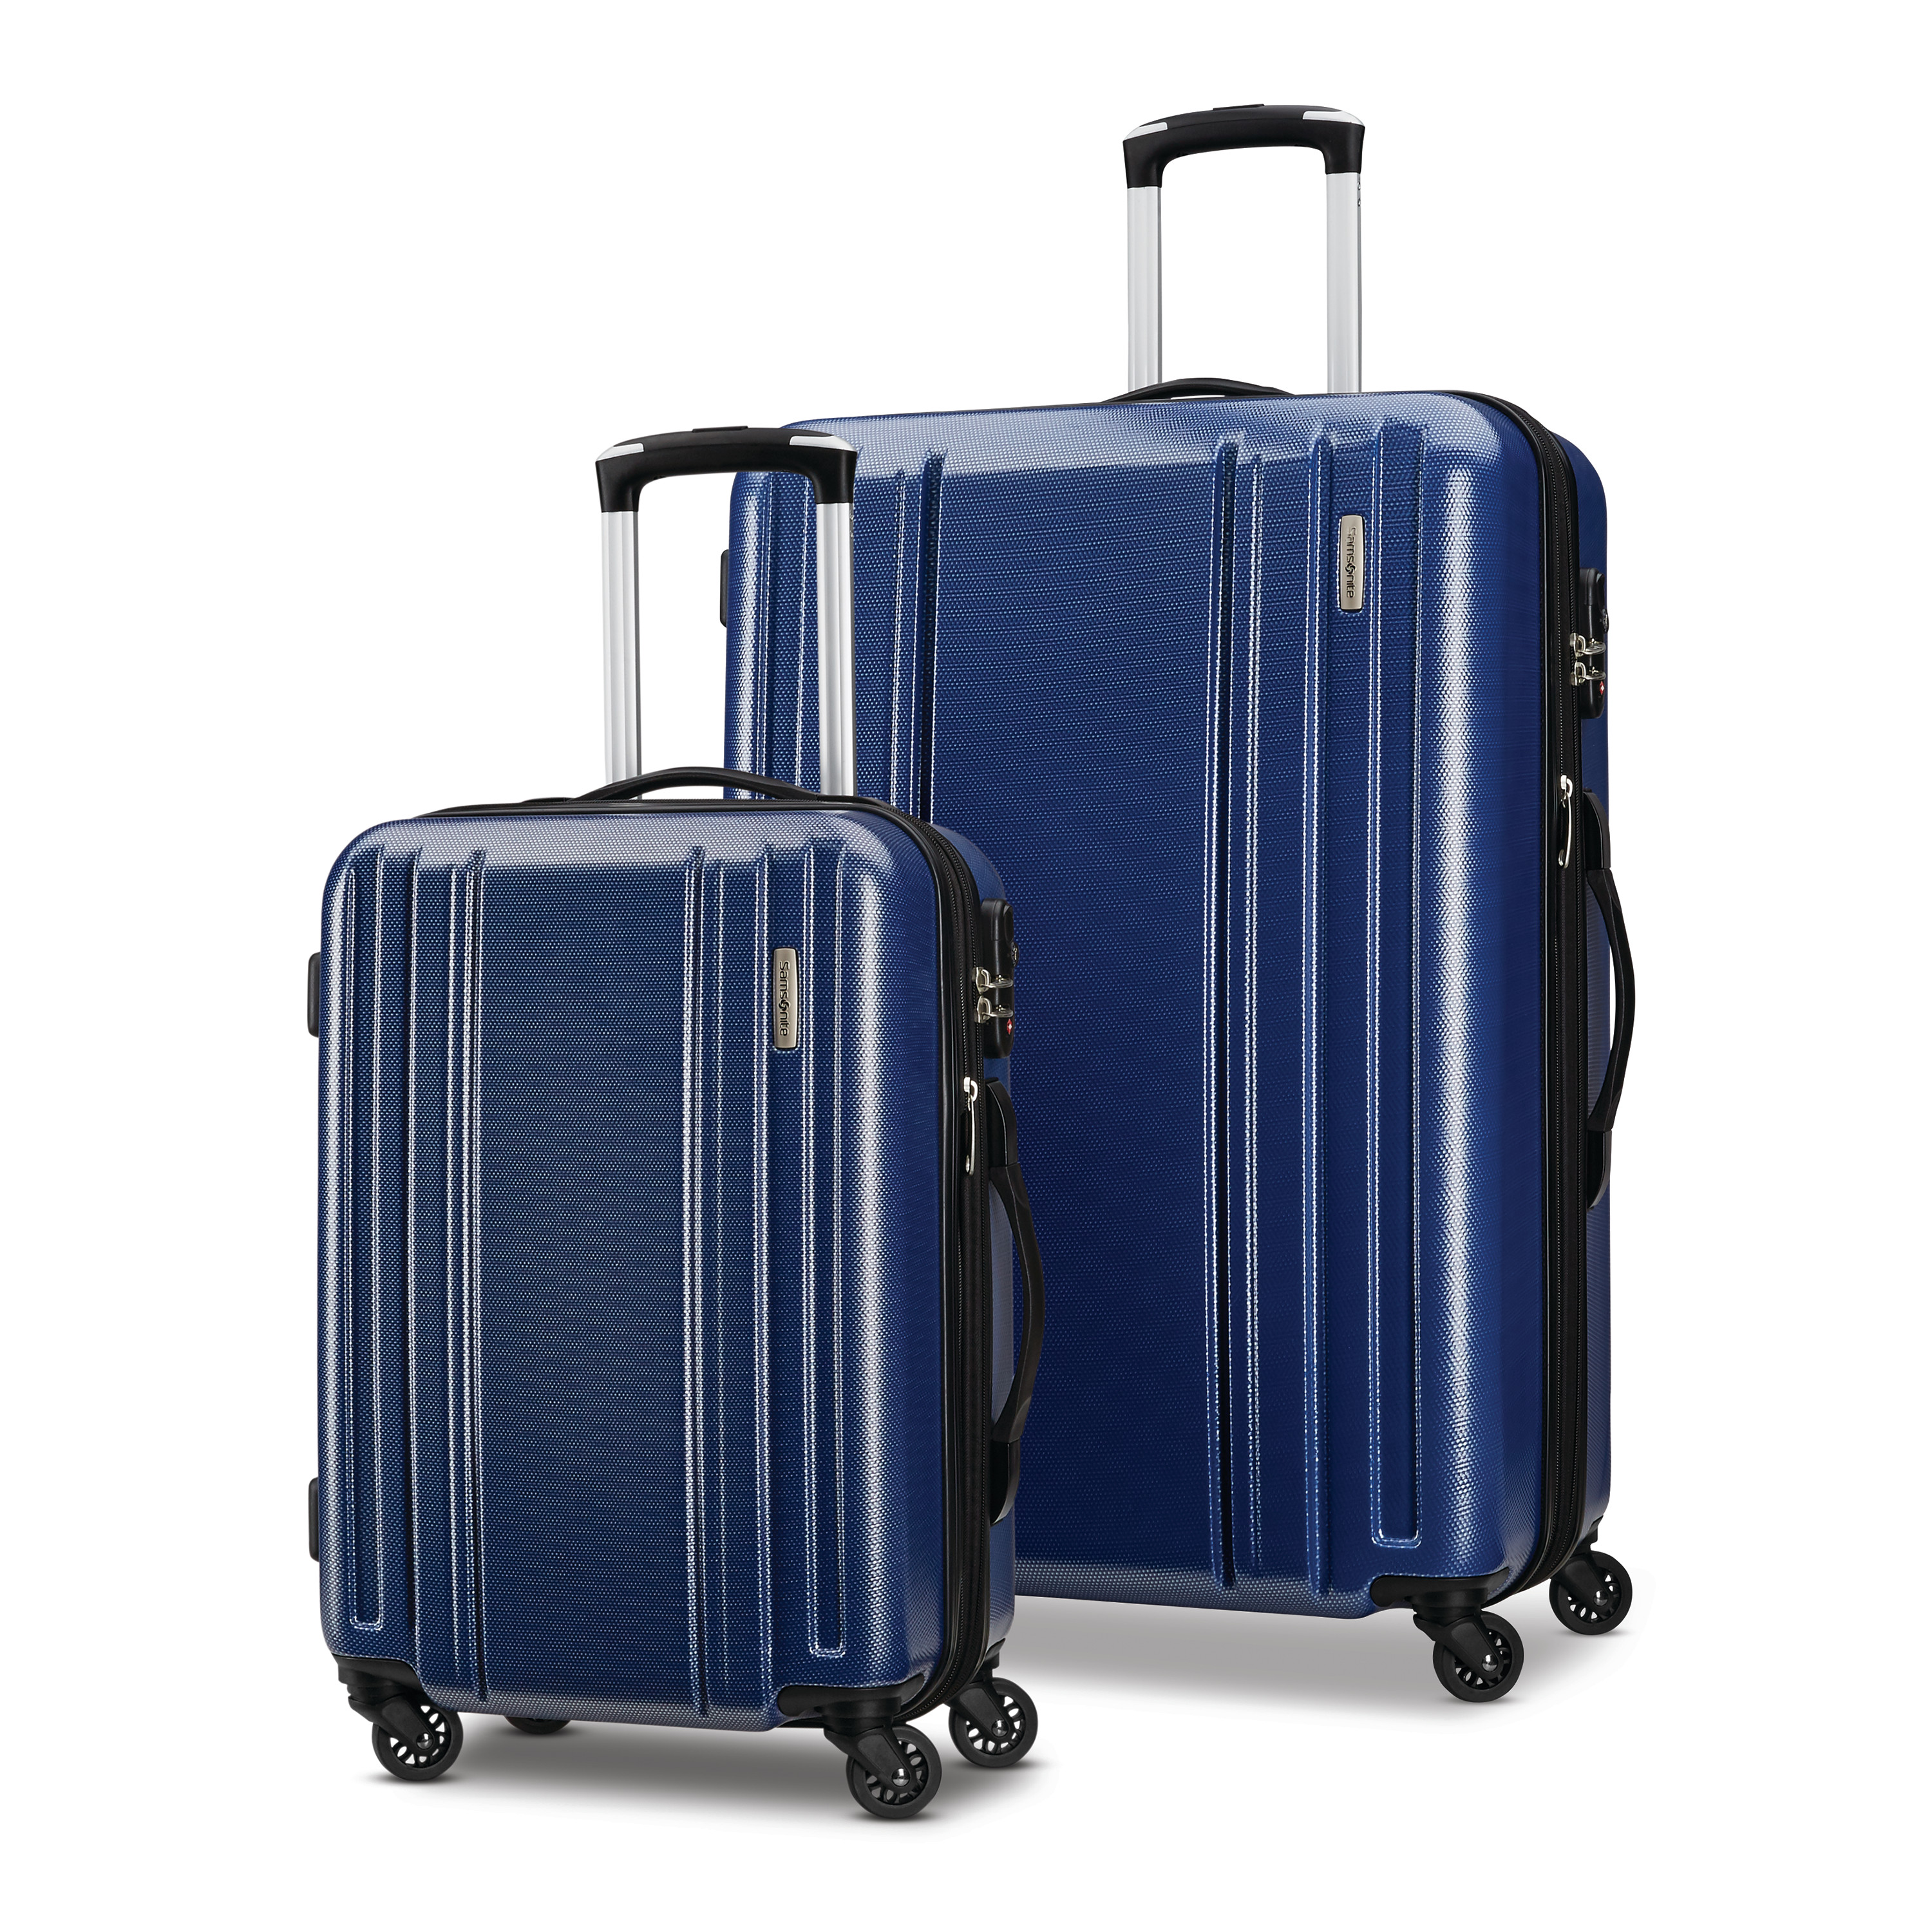 Samsonite Carbon 2 2 Piece (CO/LG) Set - Luggage